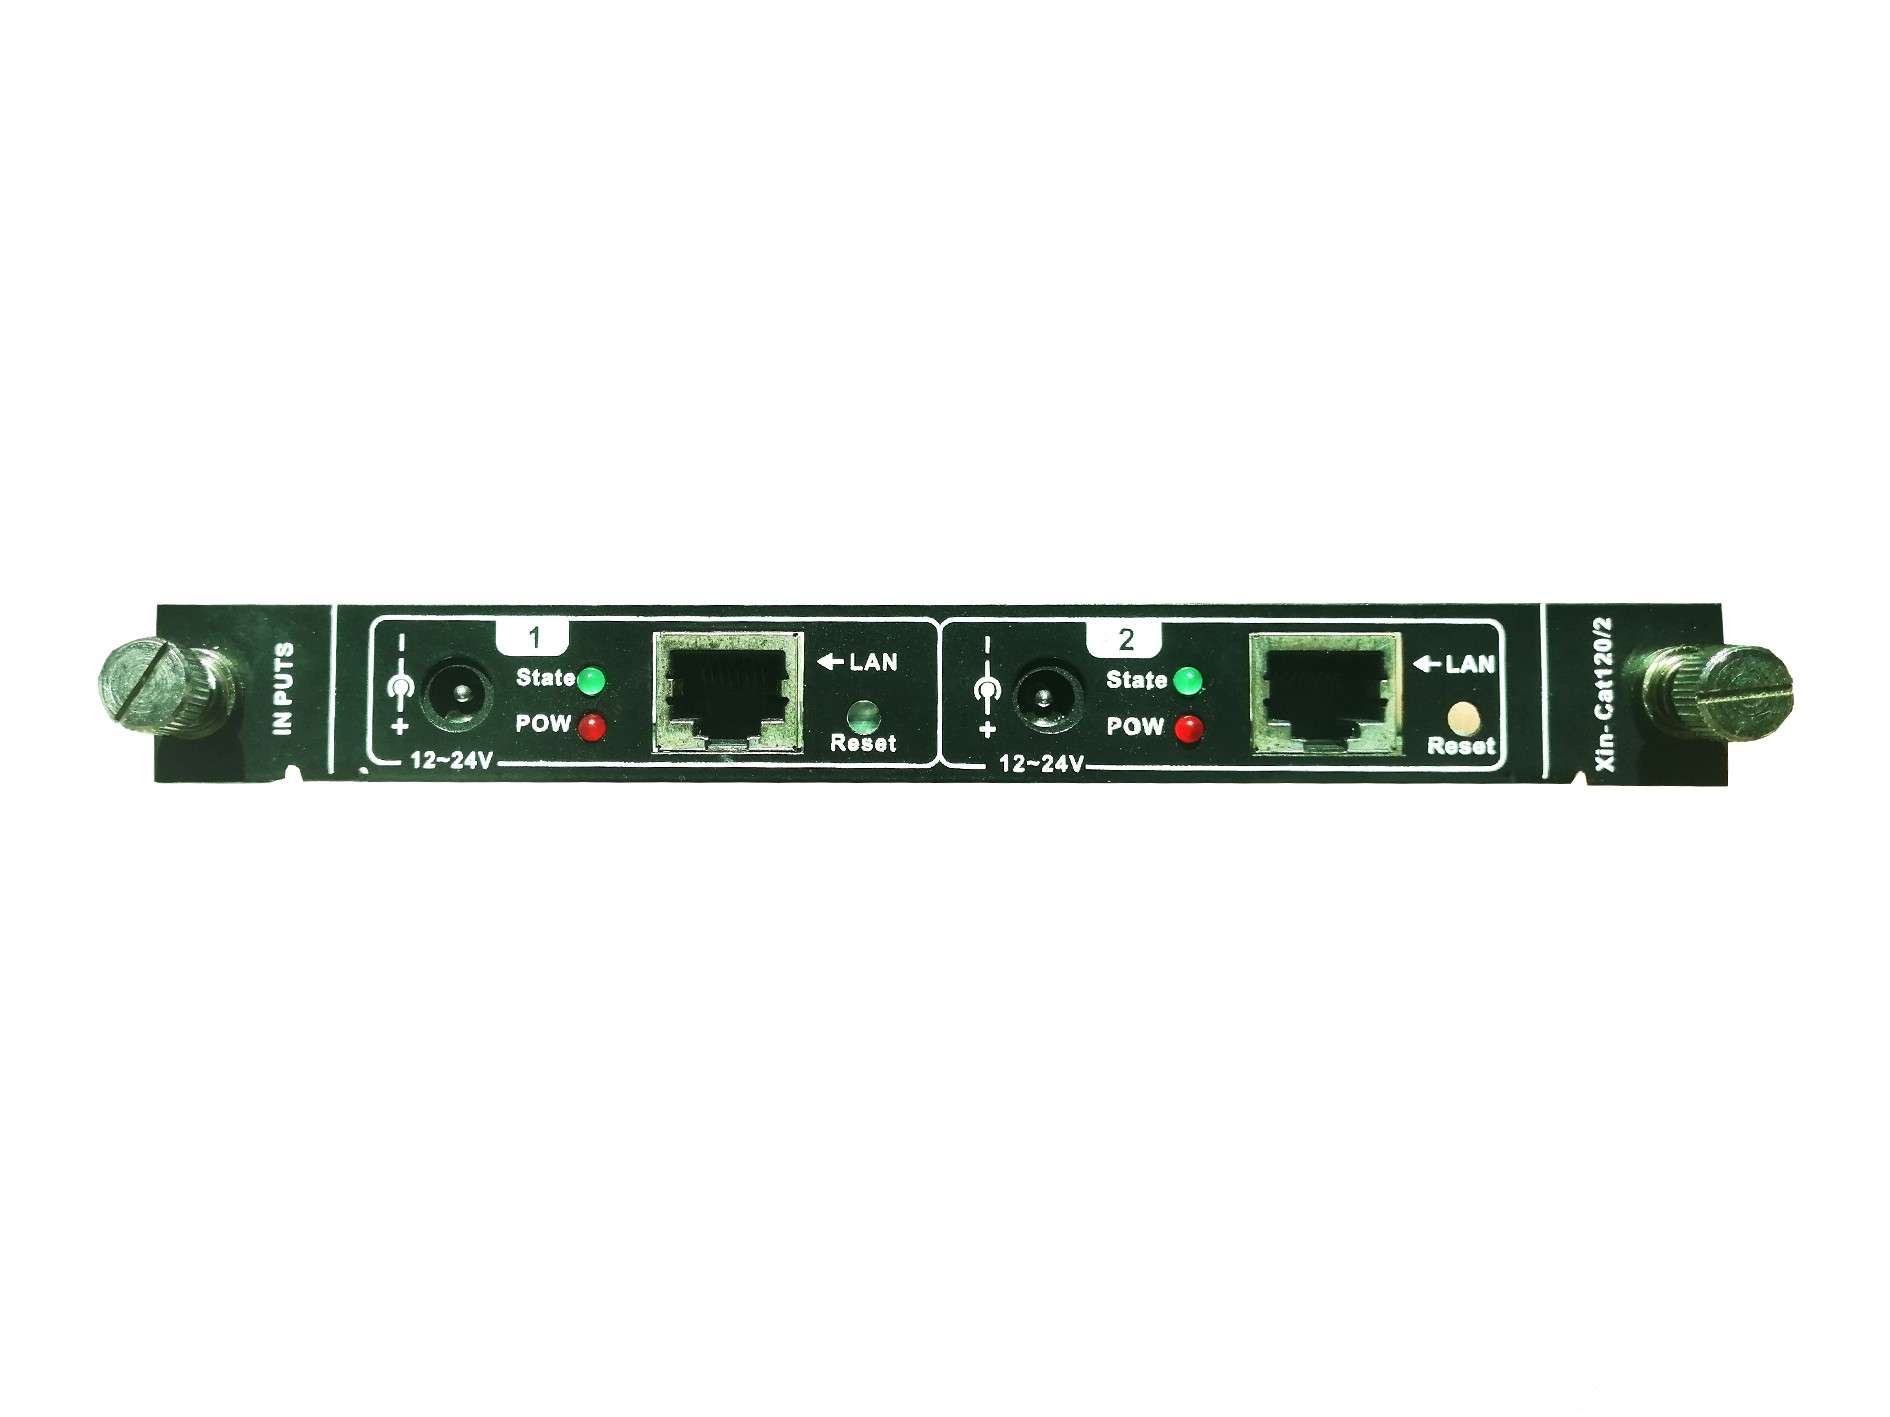 2 x HDBASET signal input boards